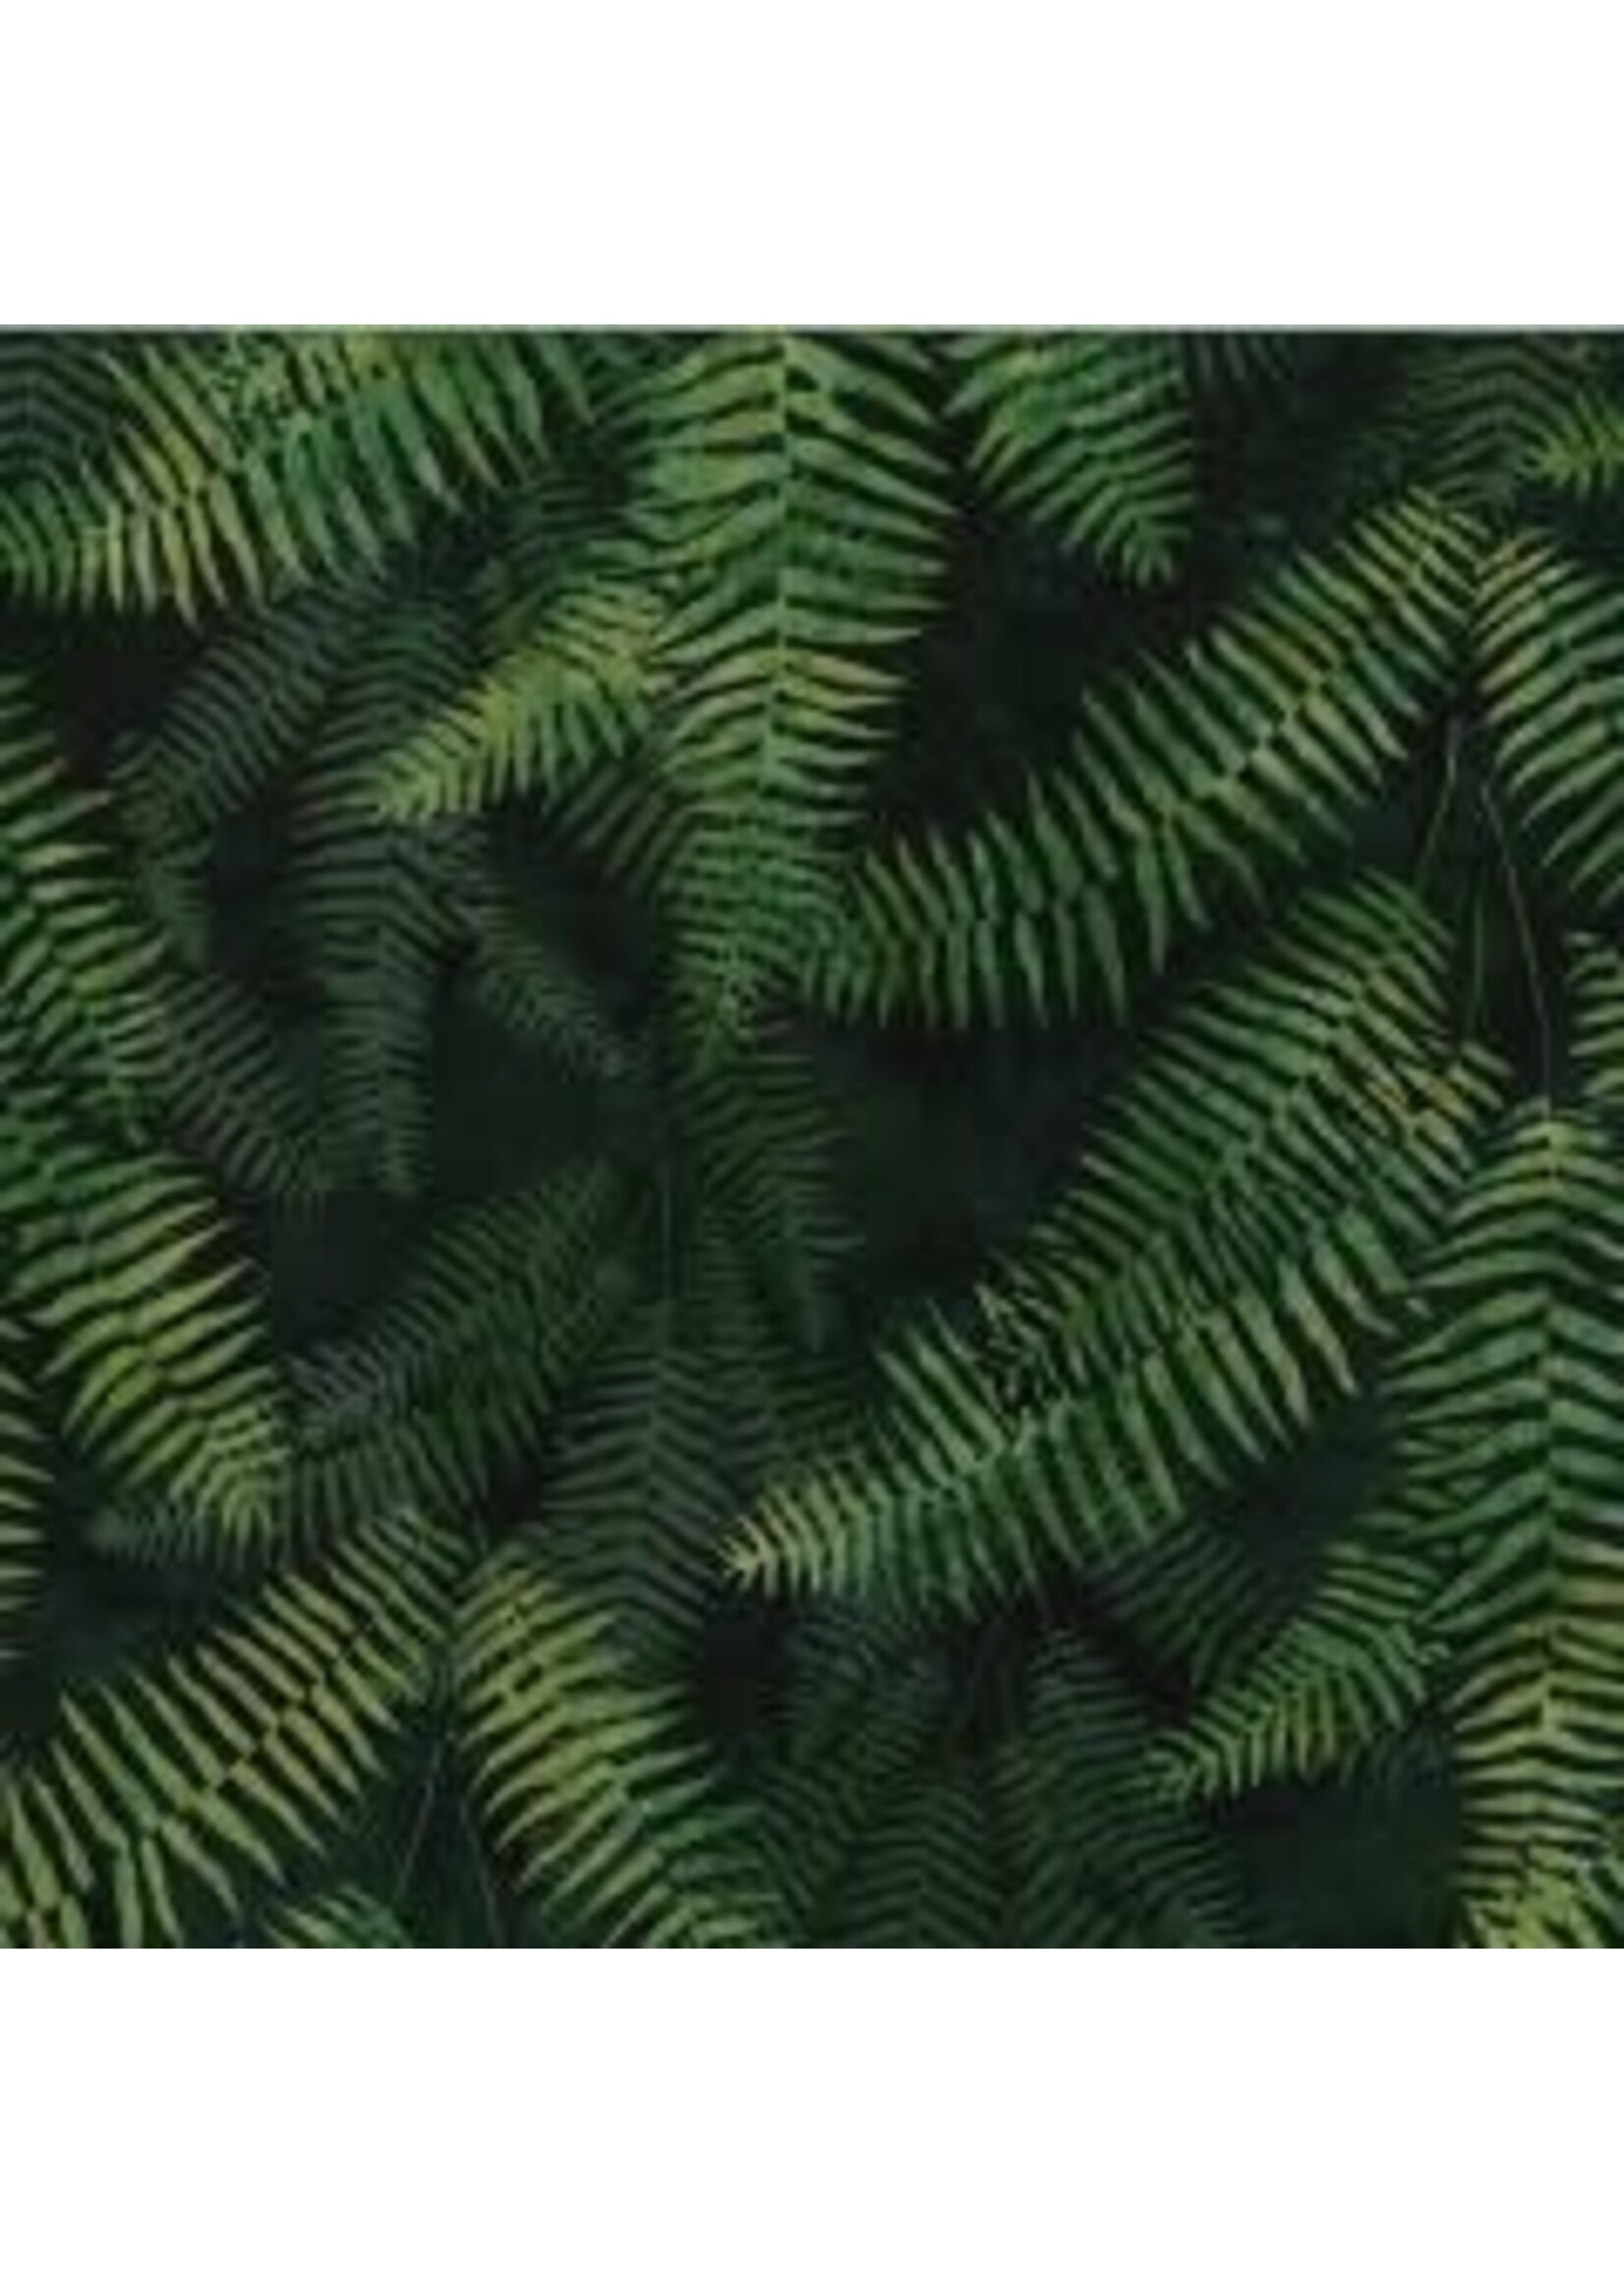 Hoffman Fabrics Bali Hand-Dyed - Christmas Green - Coupon - 100 cm x 110 cm